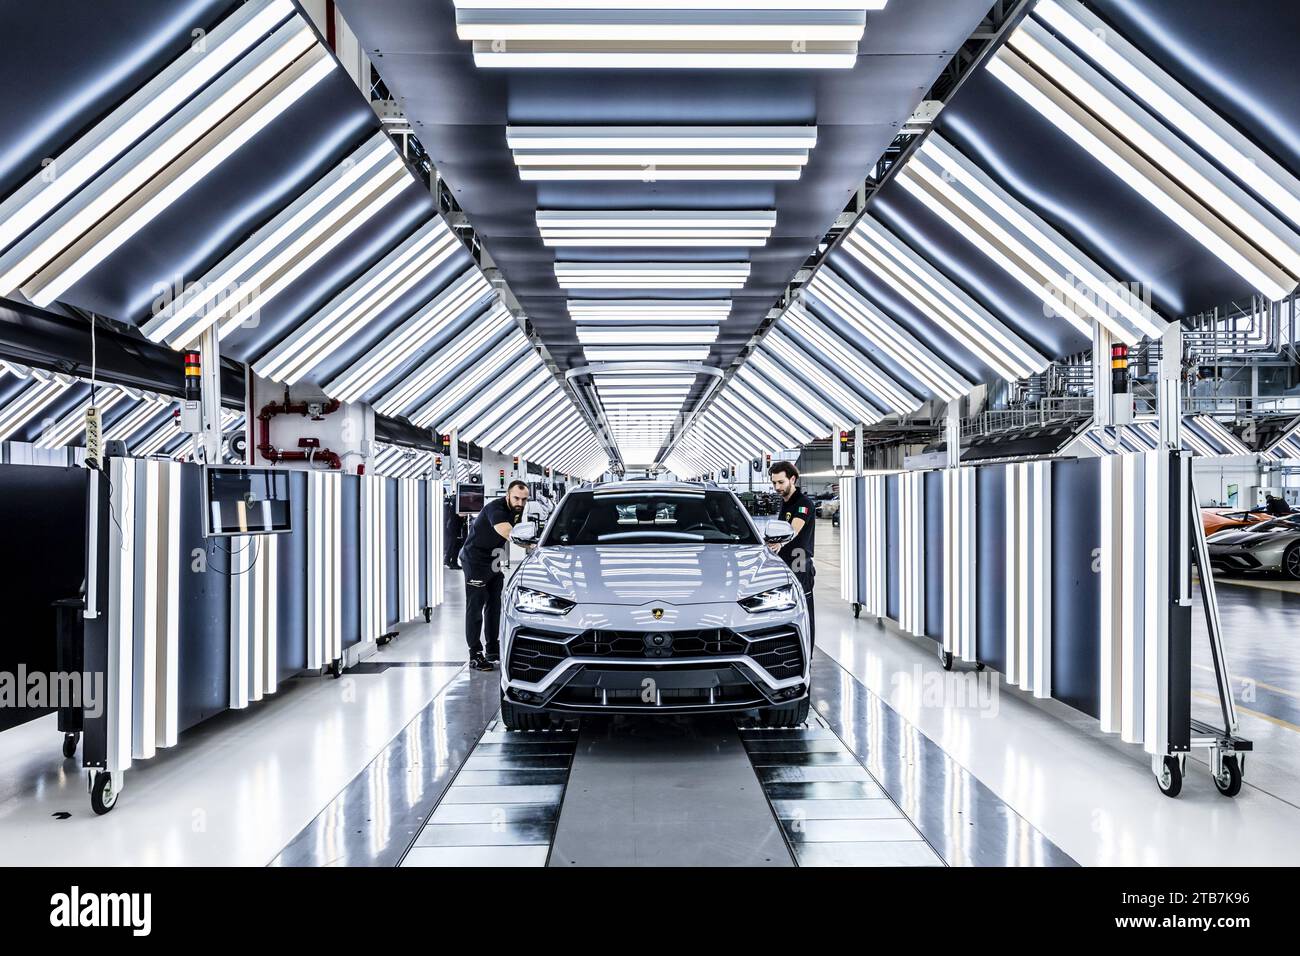 Italy, Sant’'Agata Bolognese, Automobili Lamborghini’s plant, 2017/10/17: end of production of the Italian brand's first SUV, the Urus model Stock Photo